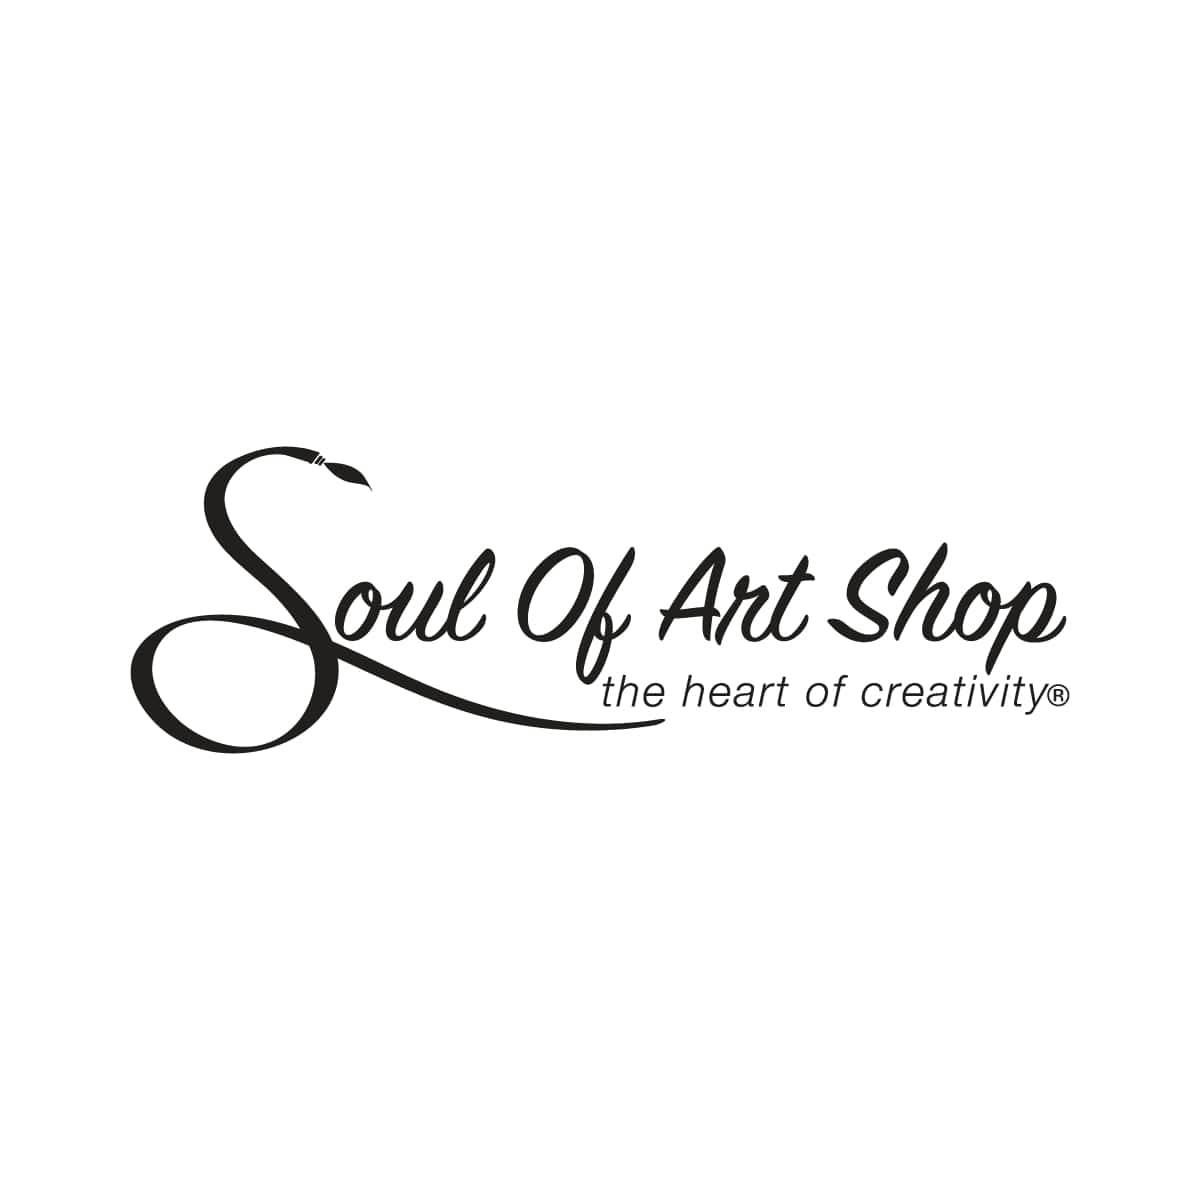 Soul of Art Shop logo